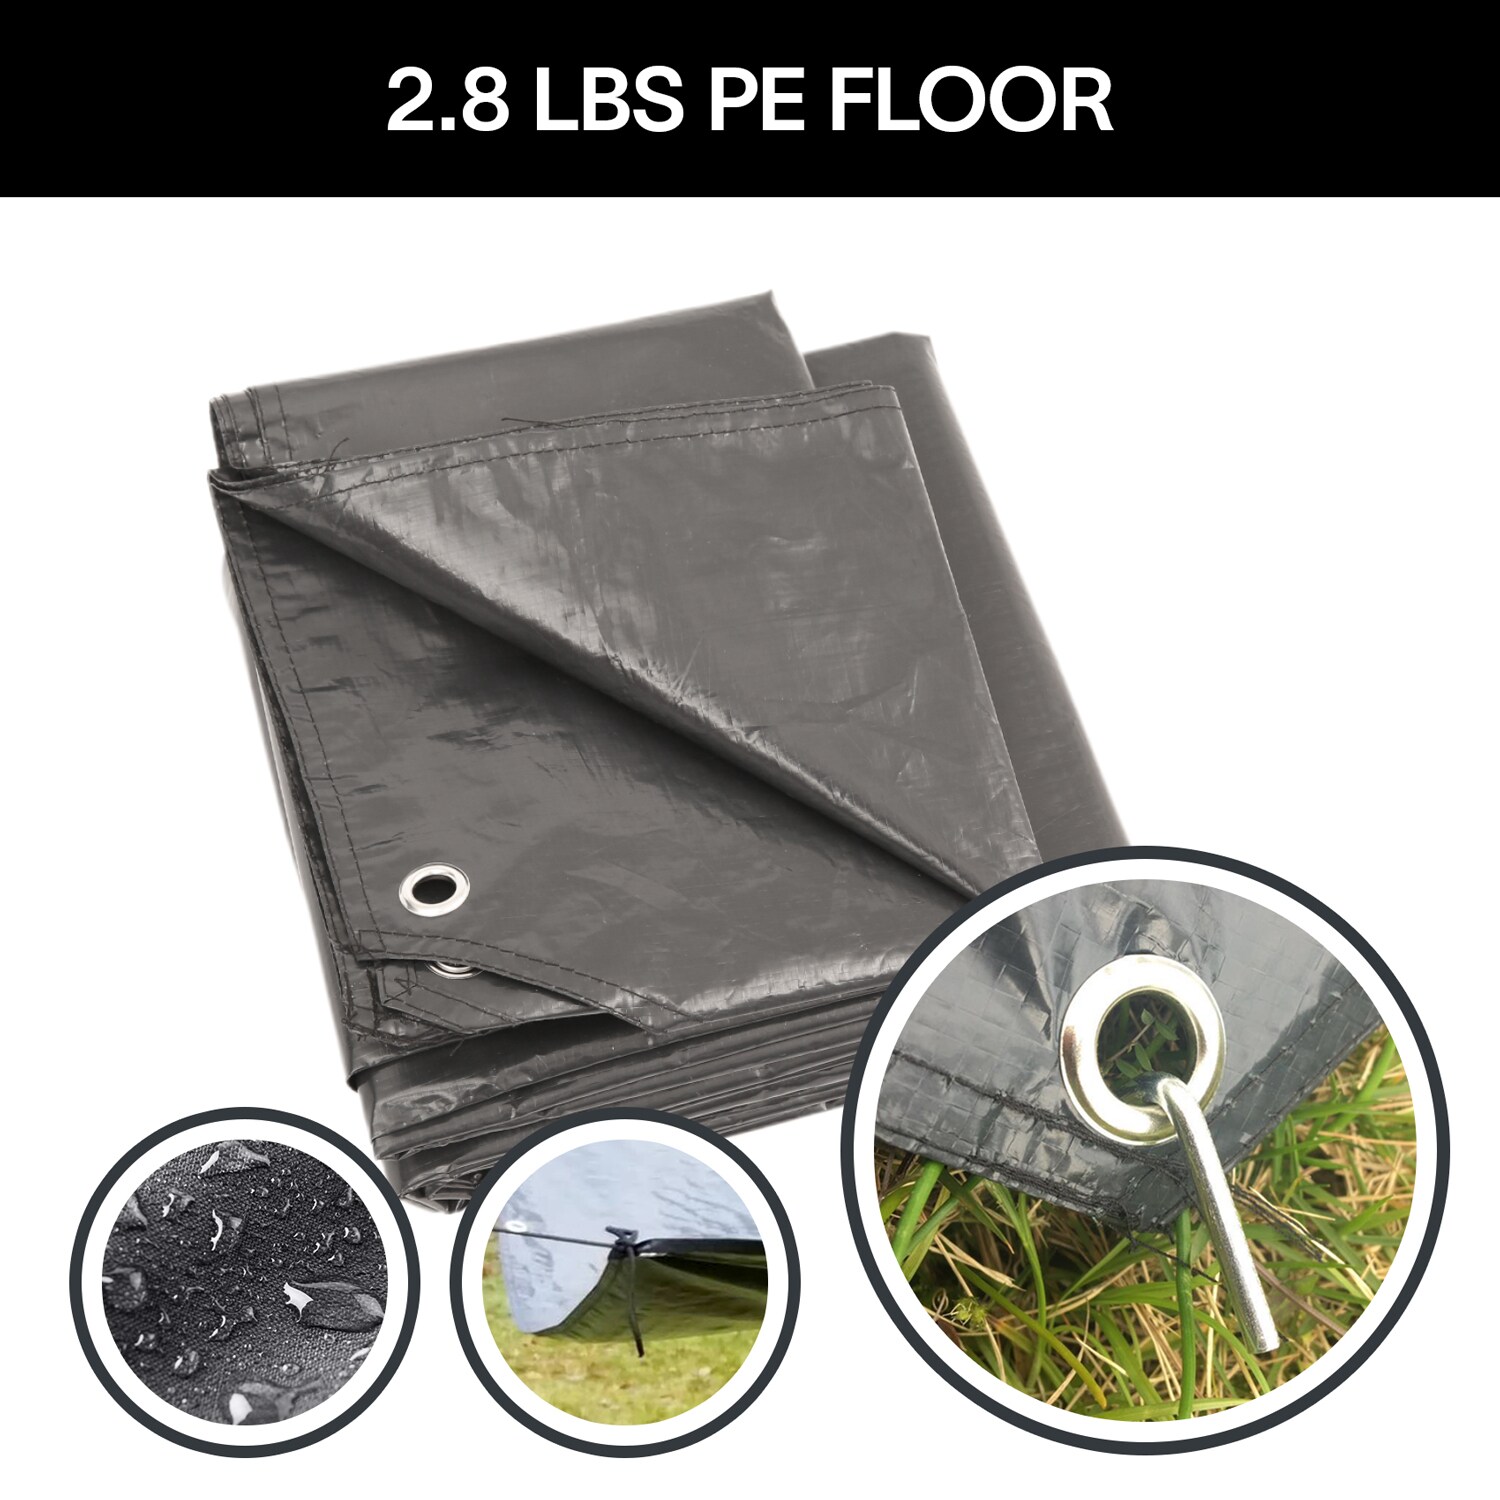 Waterproof PE Tarp Floor Mat For Screen House Gazebo